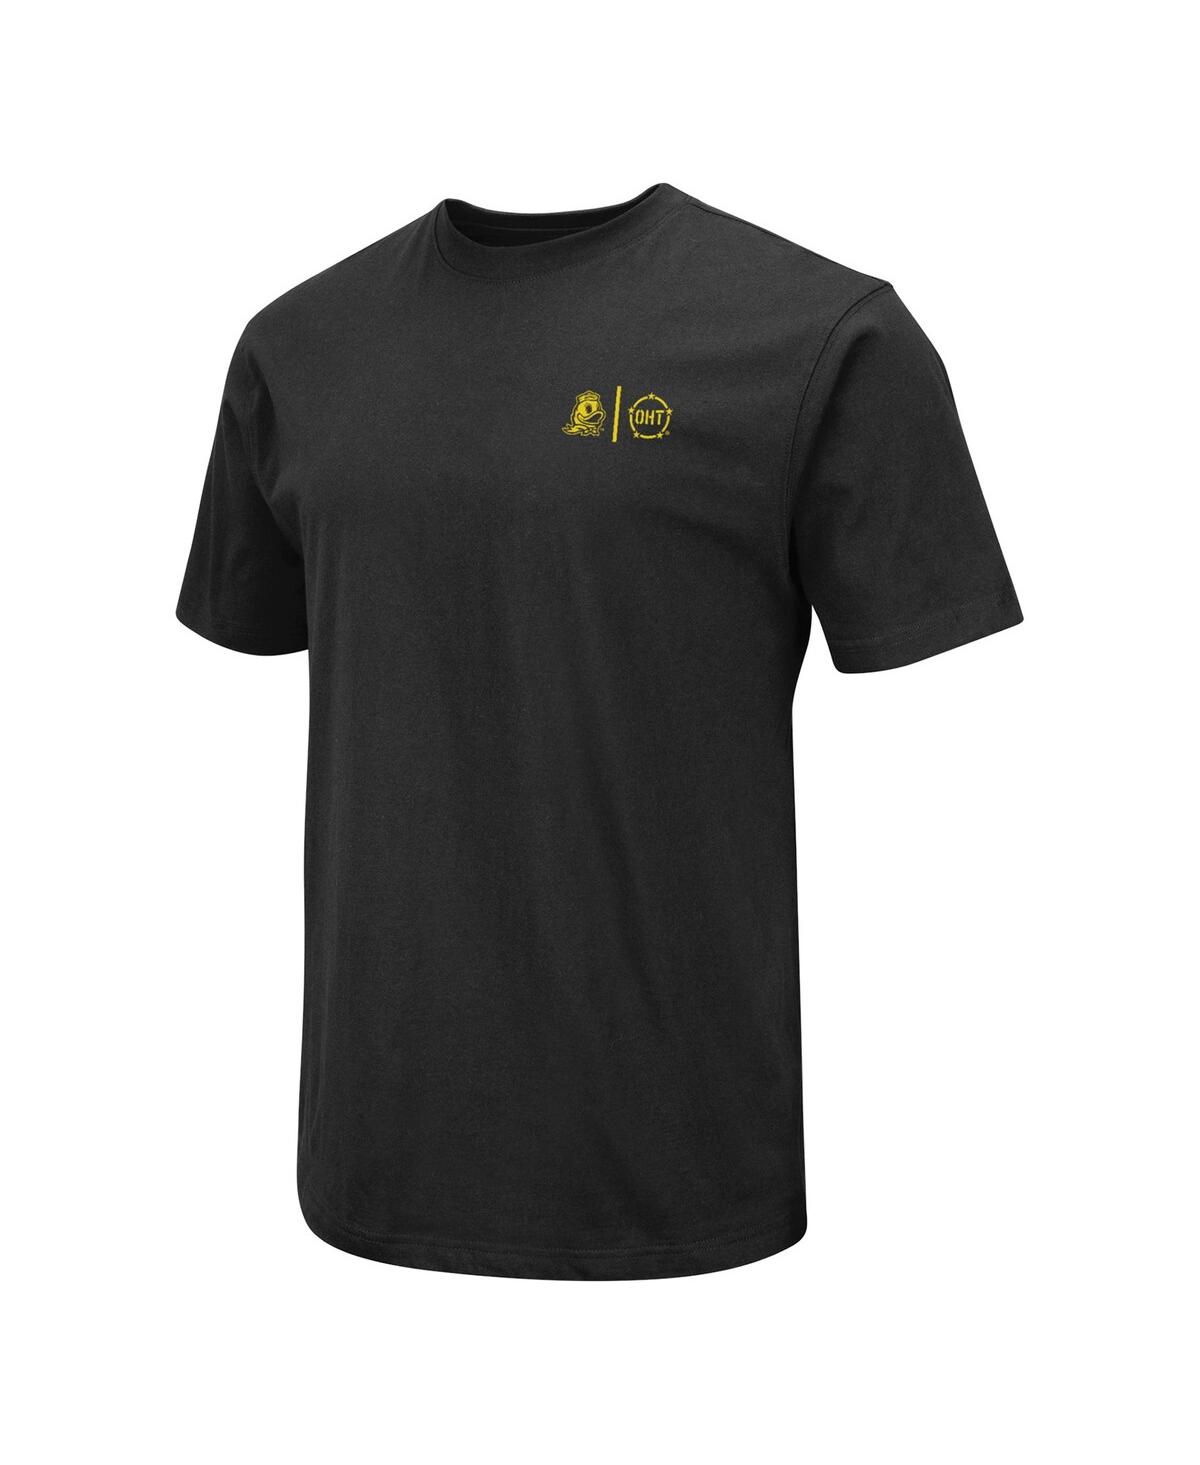 Shop Colosseum Men's  Black Oregon Ducks Oht Military-inspired Appreciation T-shirt